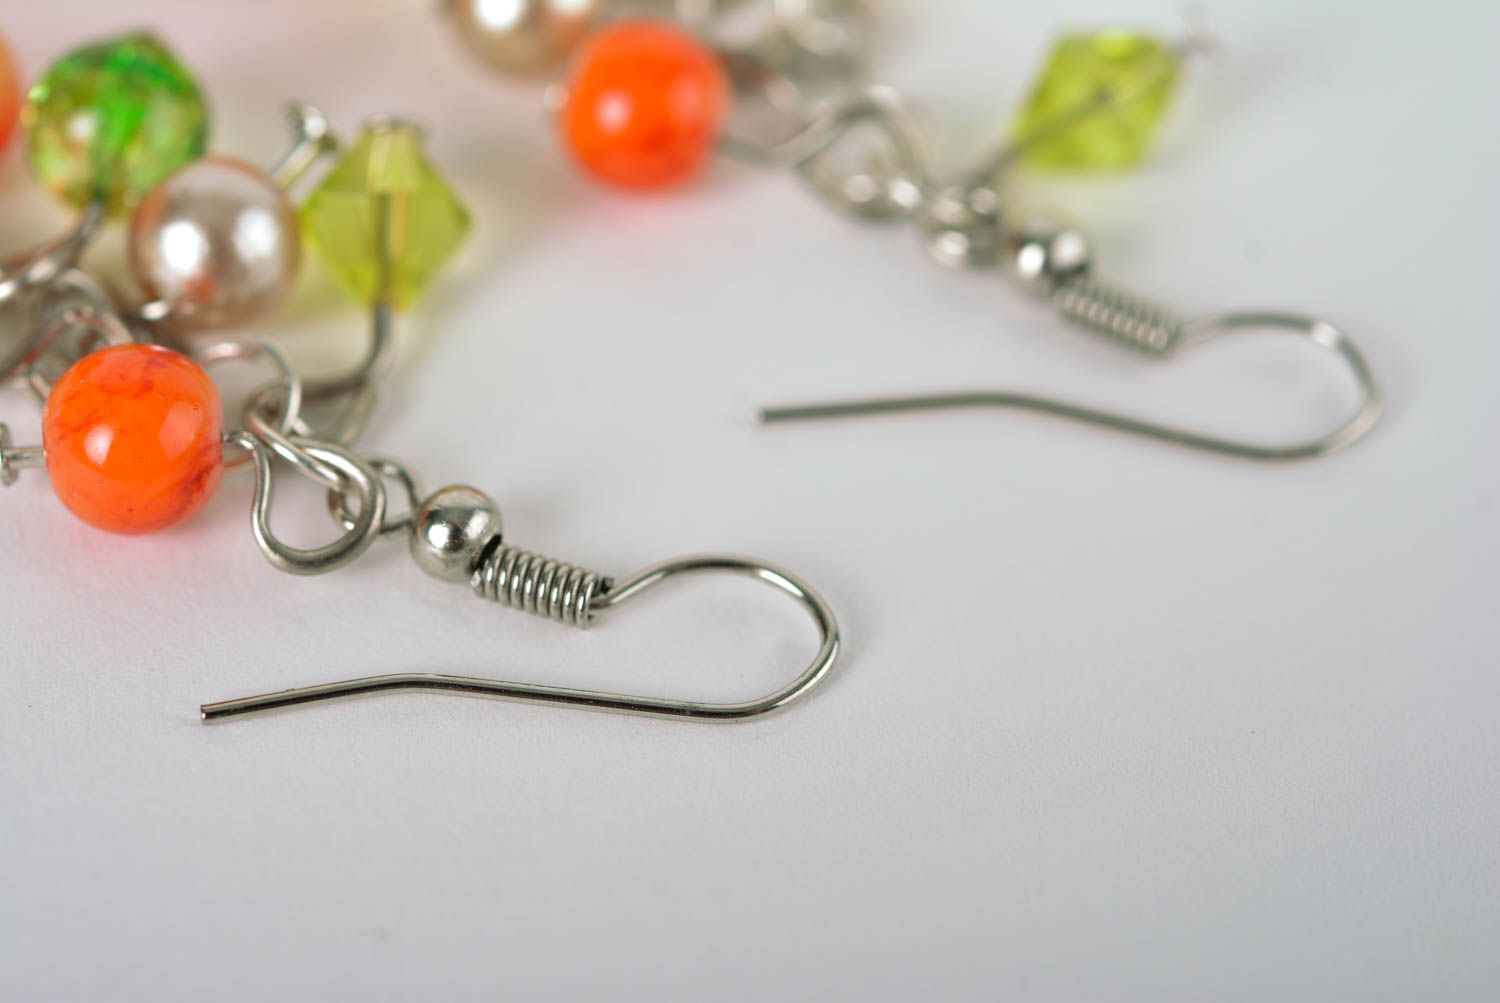 Handmade earrings designer necklace unusual gift ideas for women jewelry set photo 5